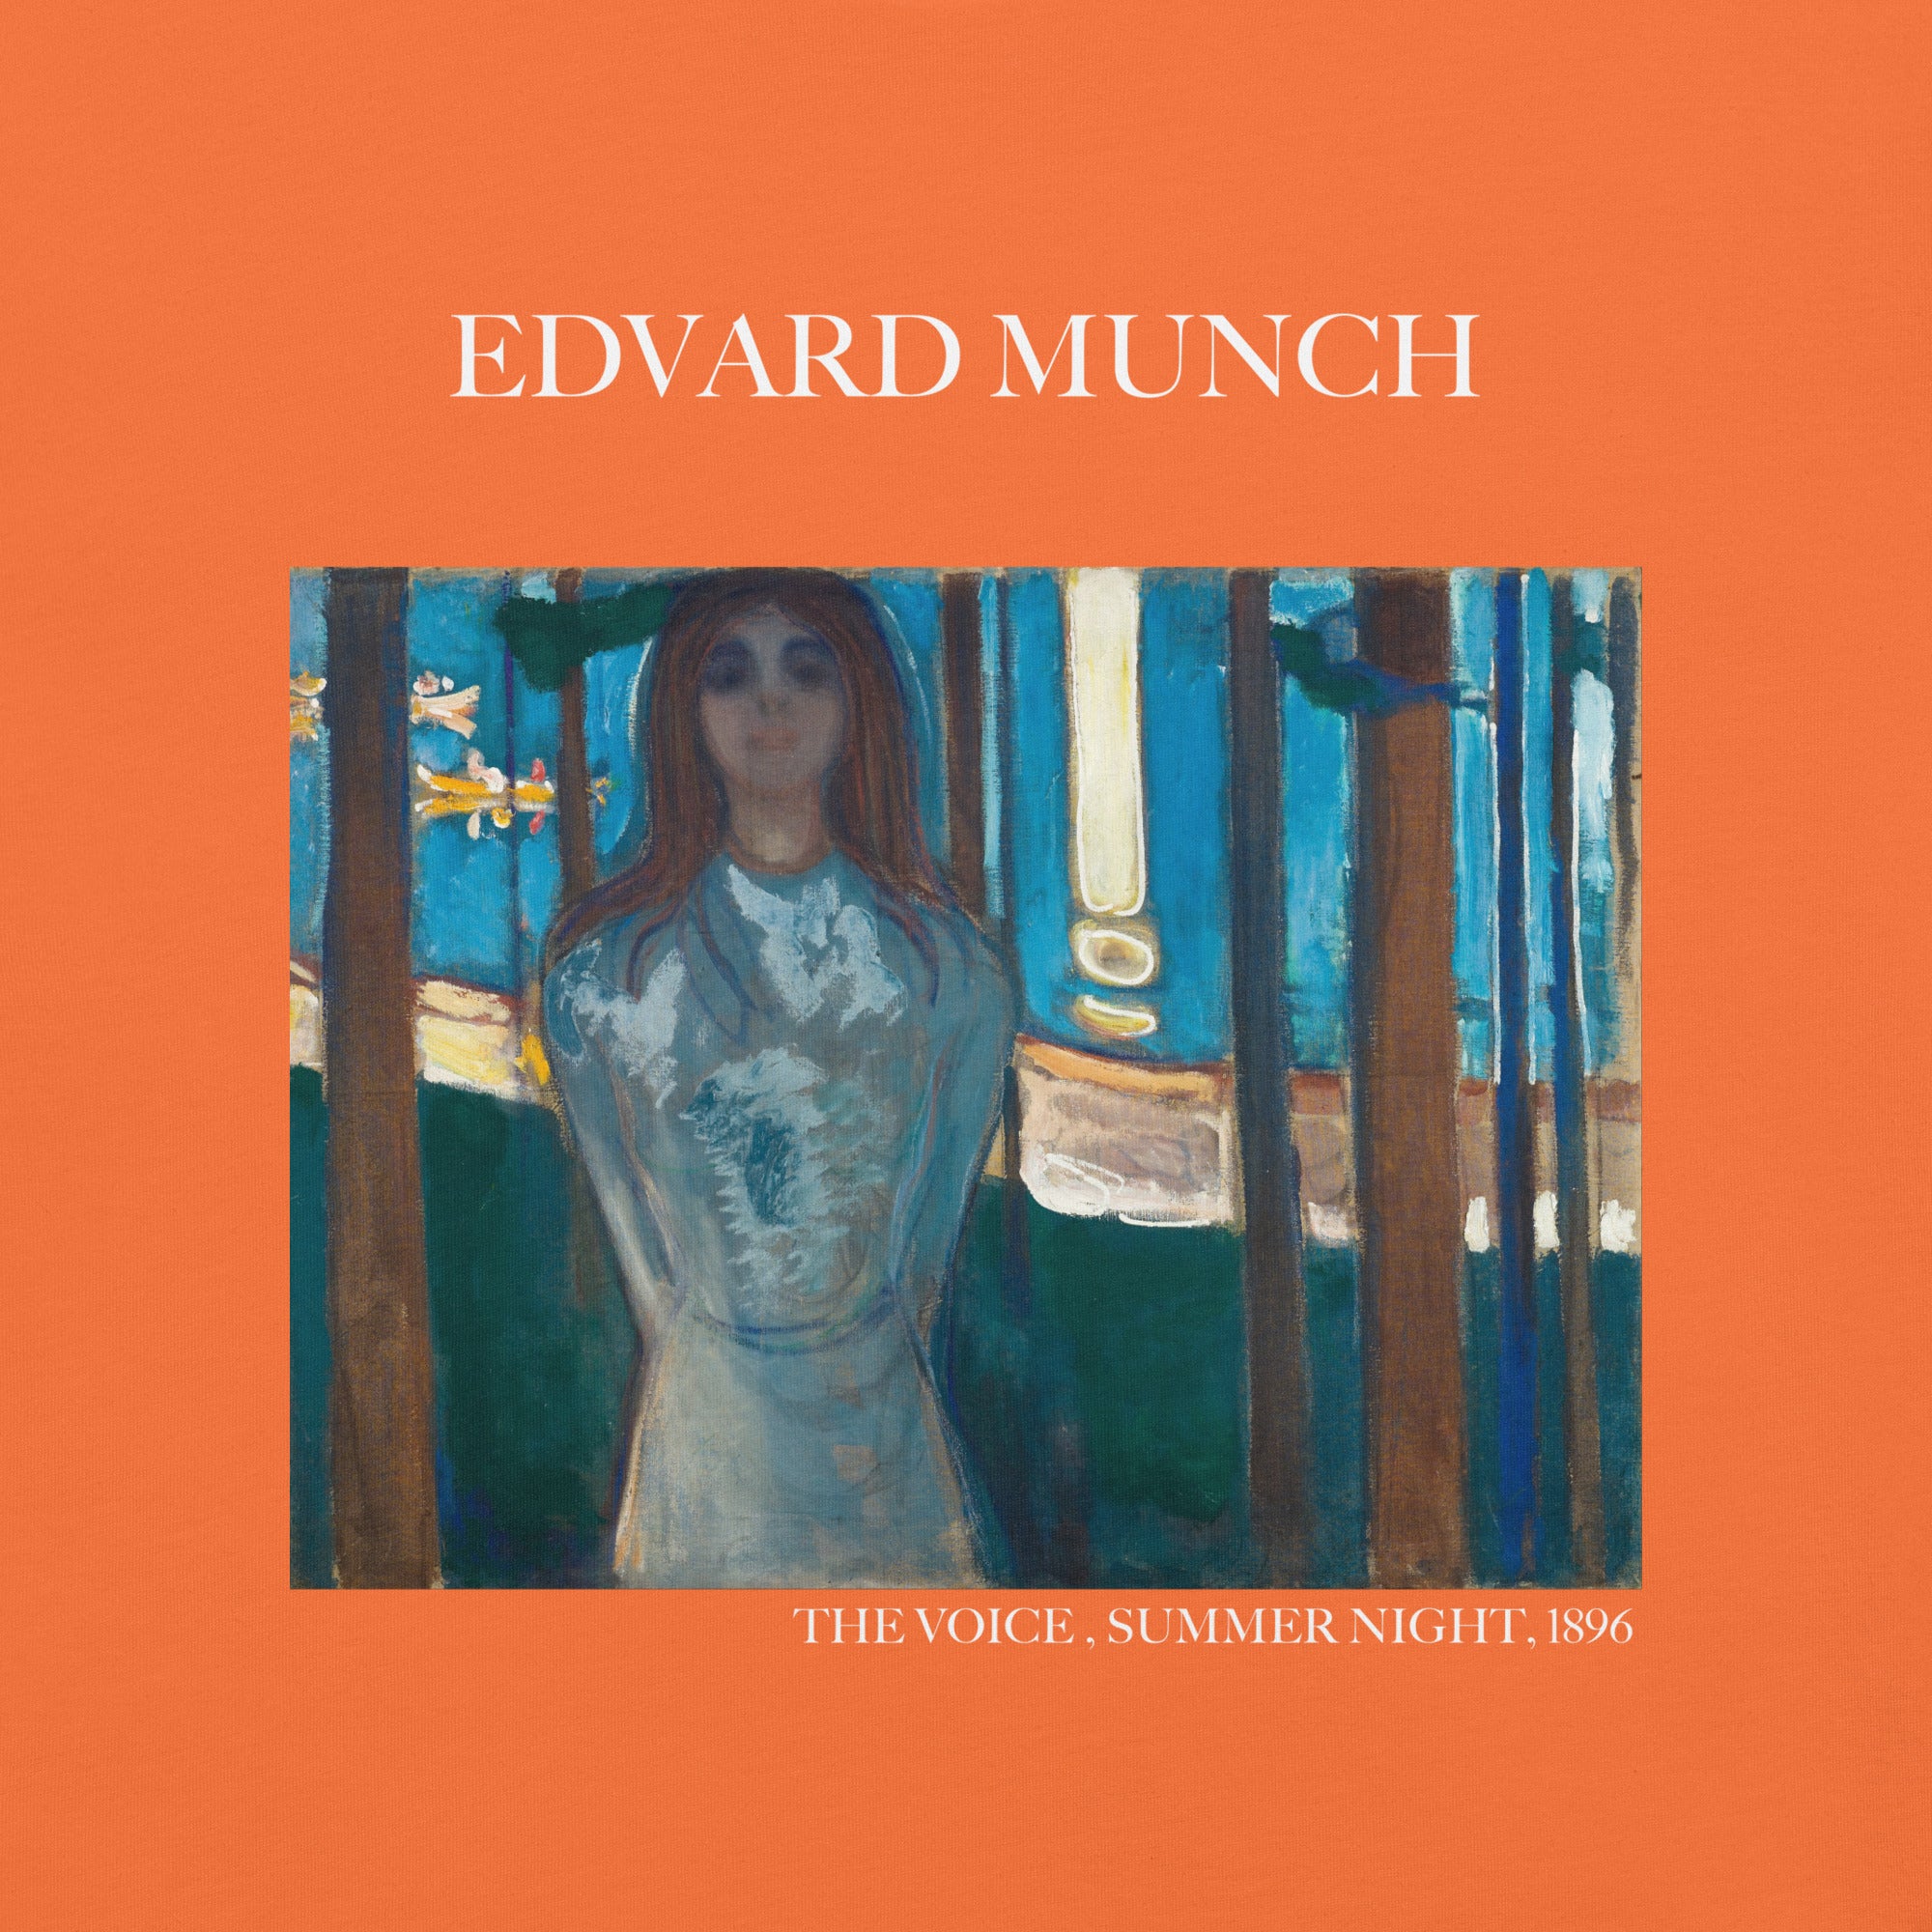 Edvard Munch 'The Voice, Summer Night' Famous Painting T-Shirt | Unisex Classic Art Tee